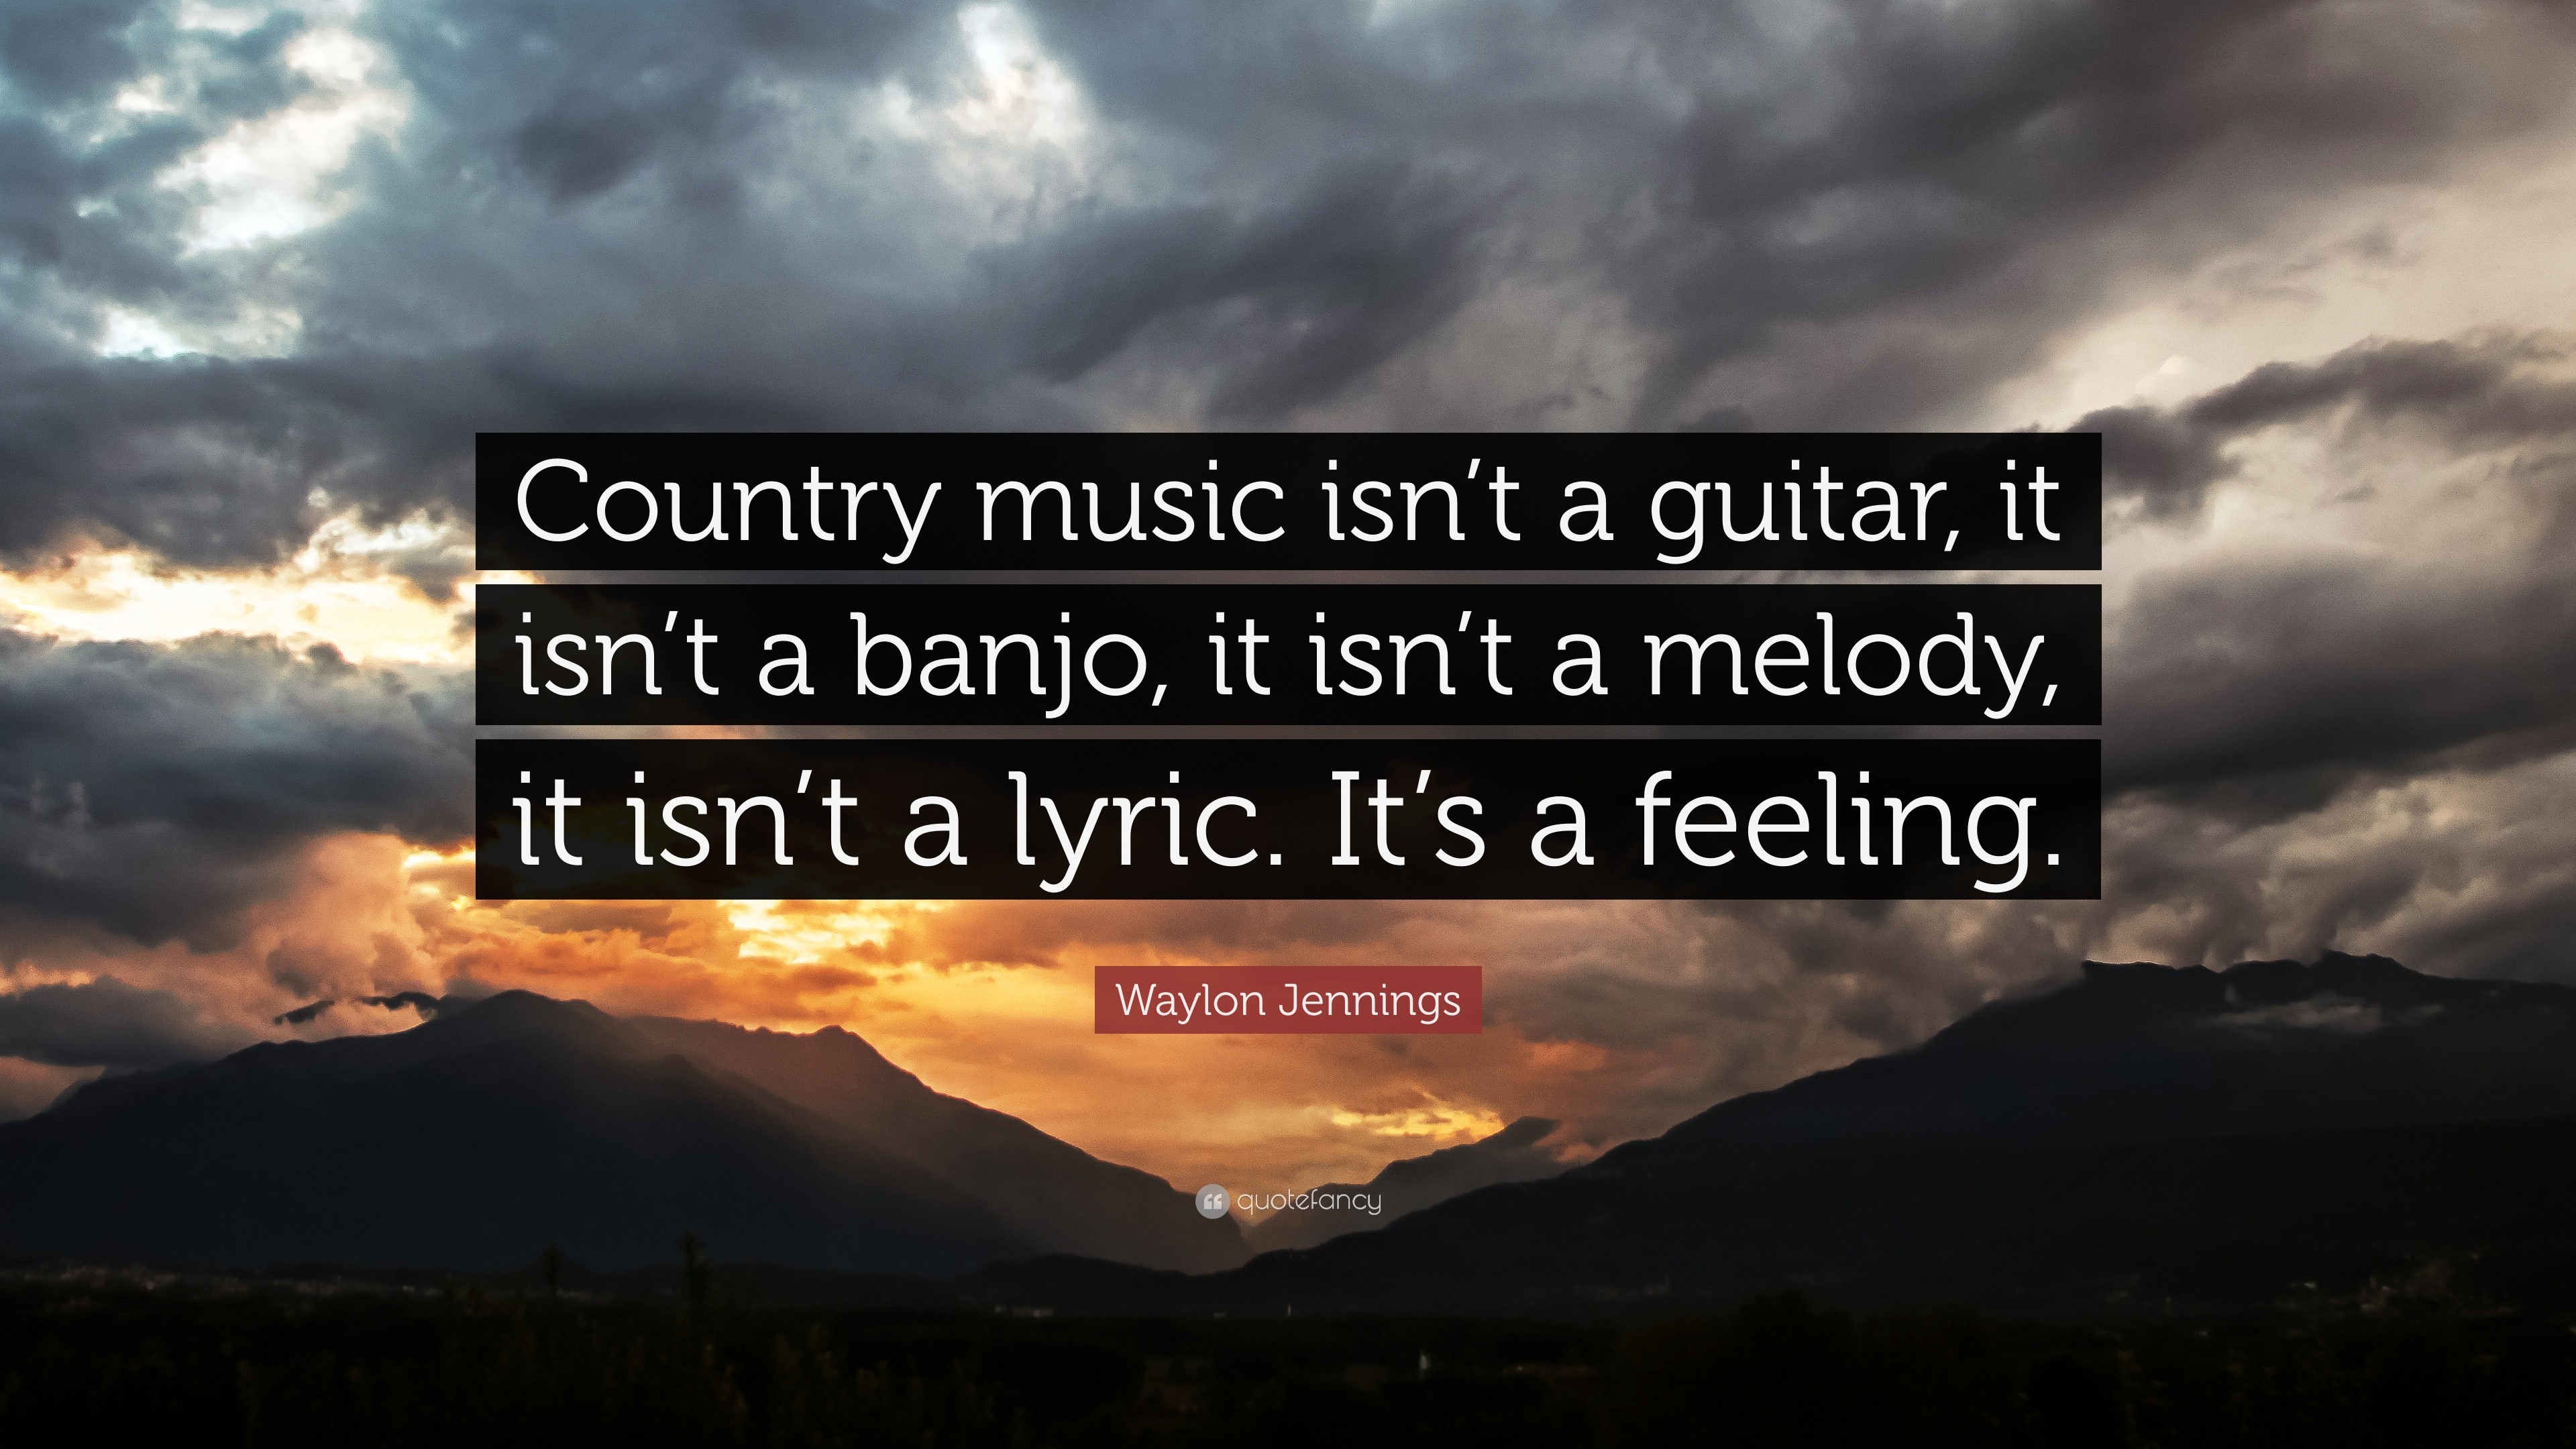 3840x2160 Waylon Jennings Quote: “Country music isn't a guitar, it isn'